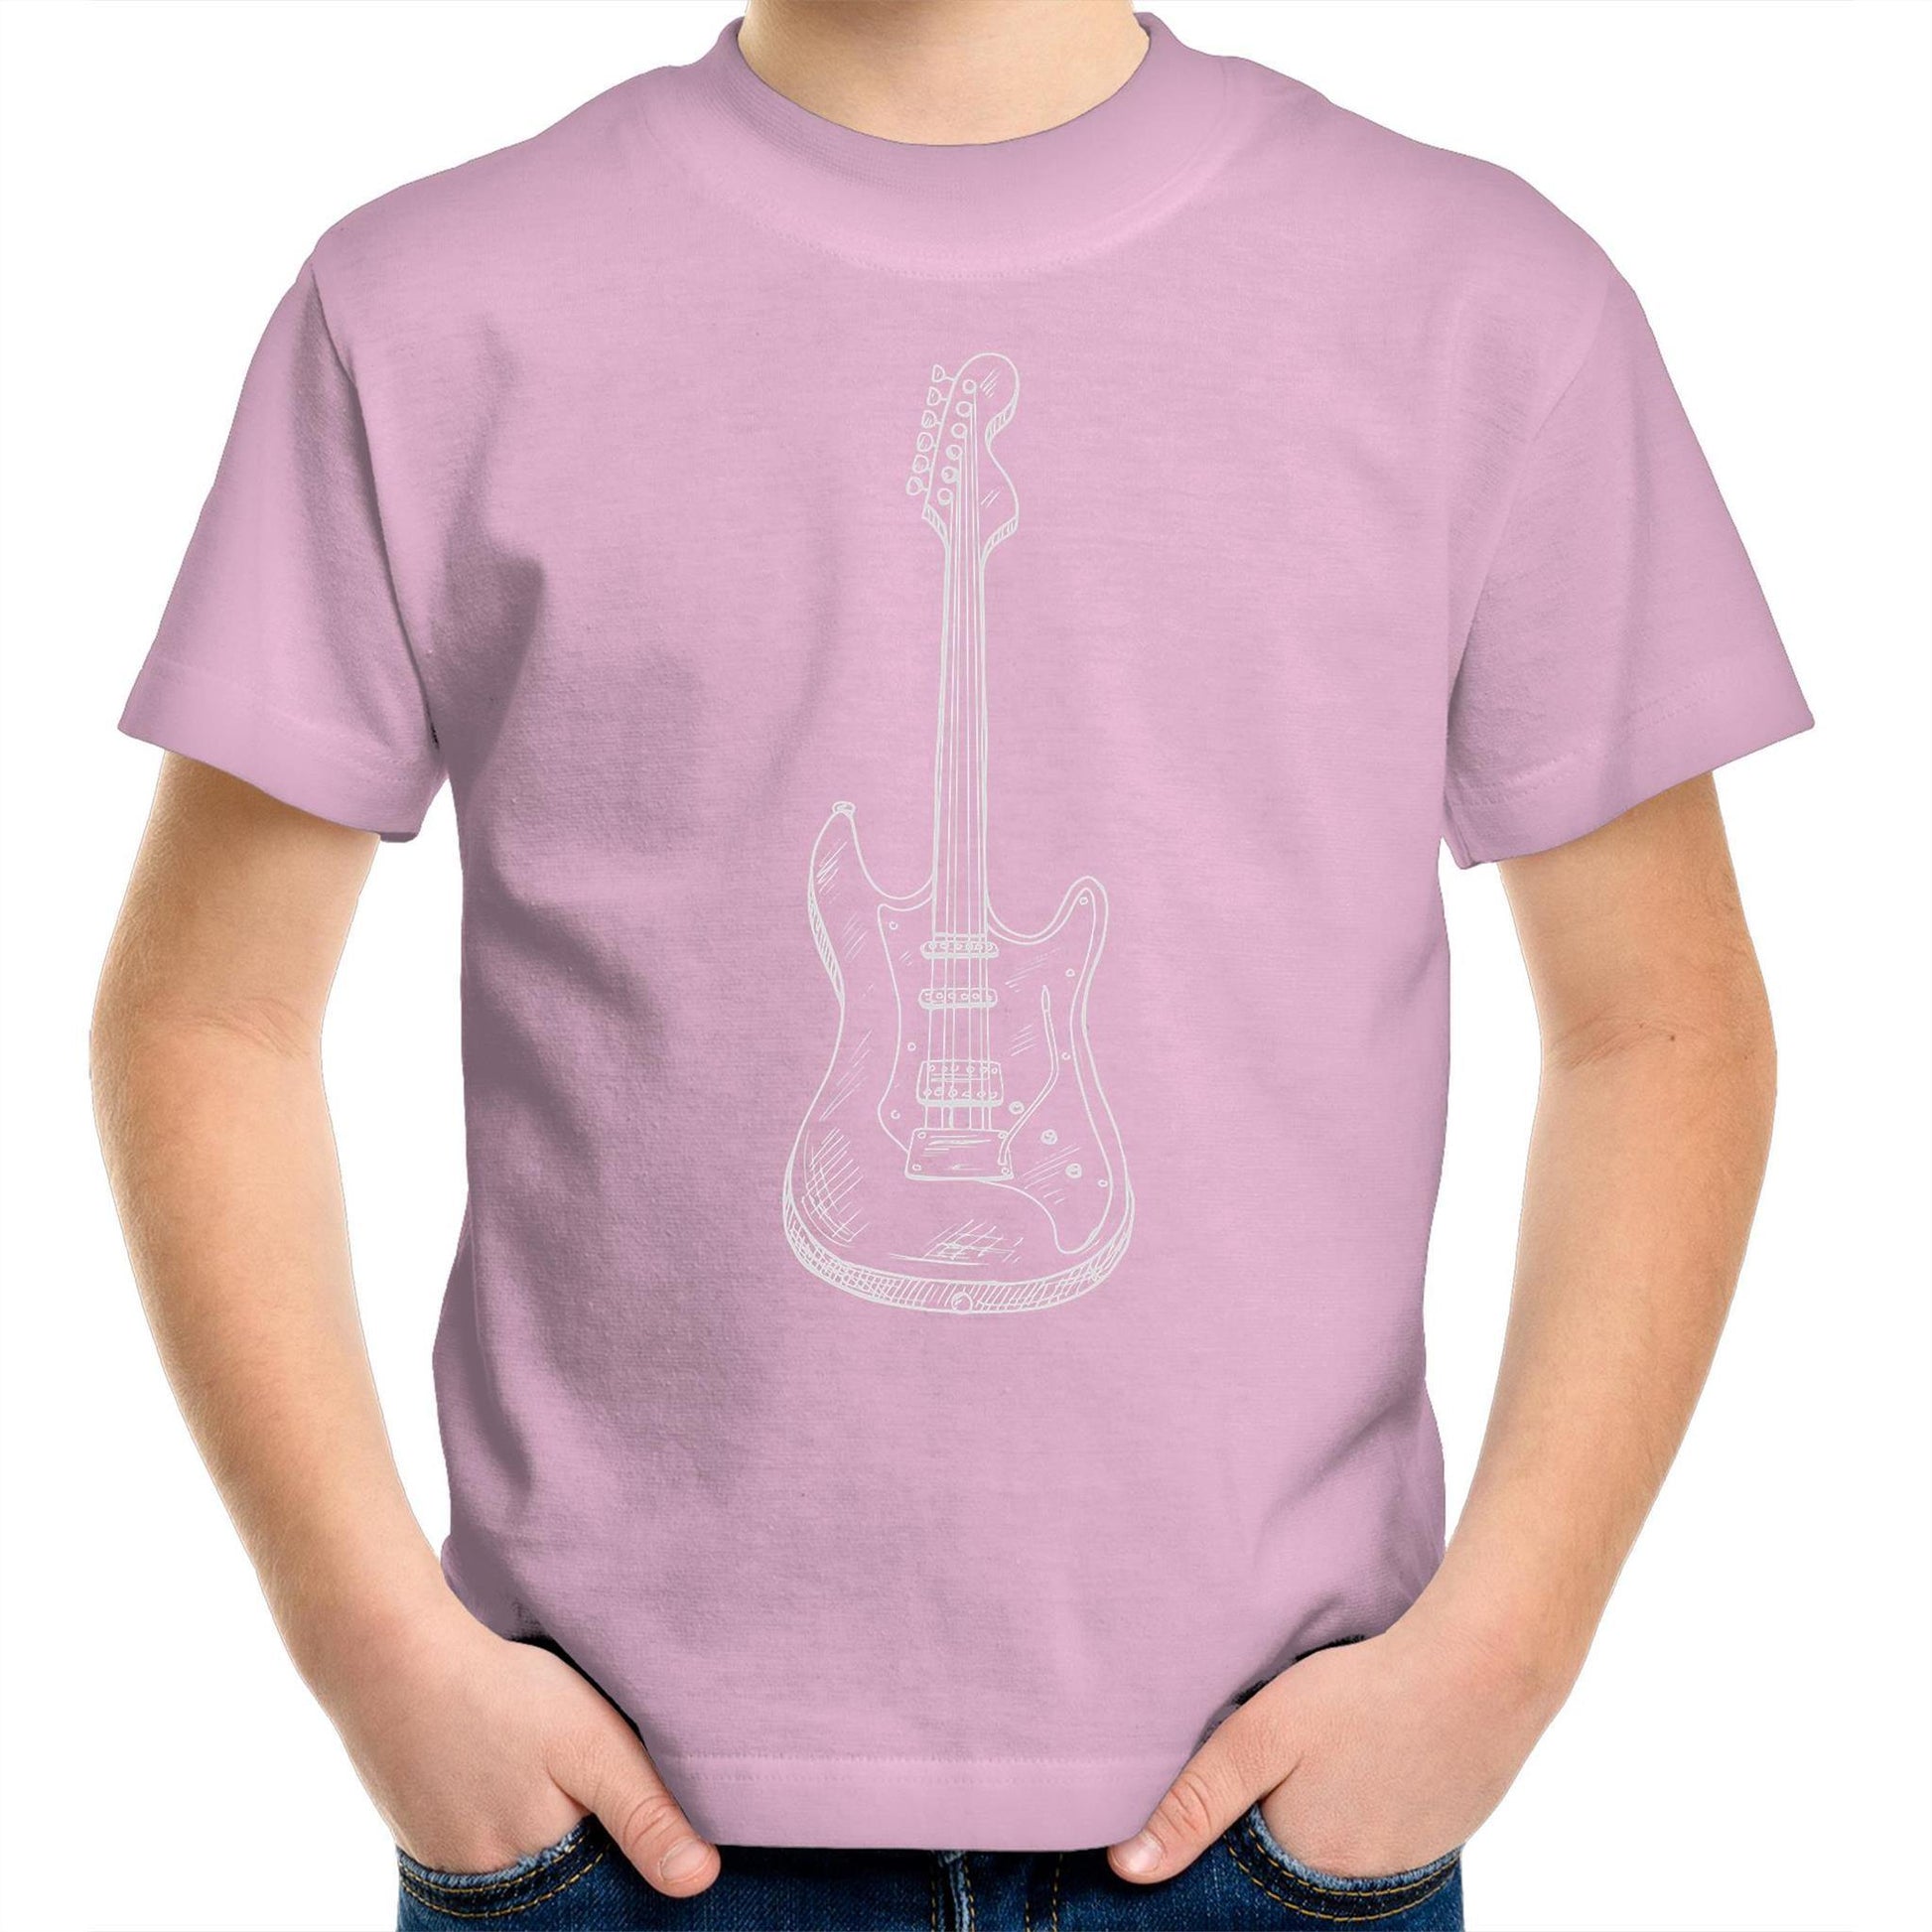 Guitar - Kids Youth Crew T-Shirt Pink Kids Youth T-shirt Music